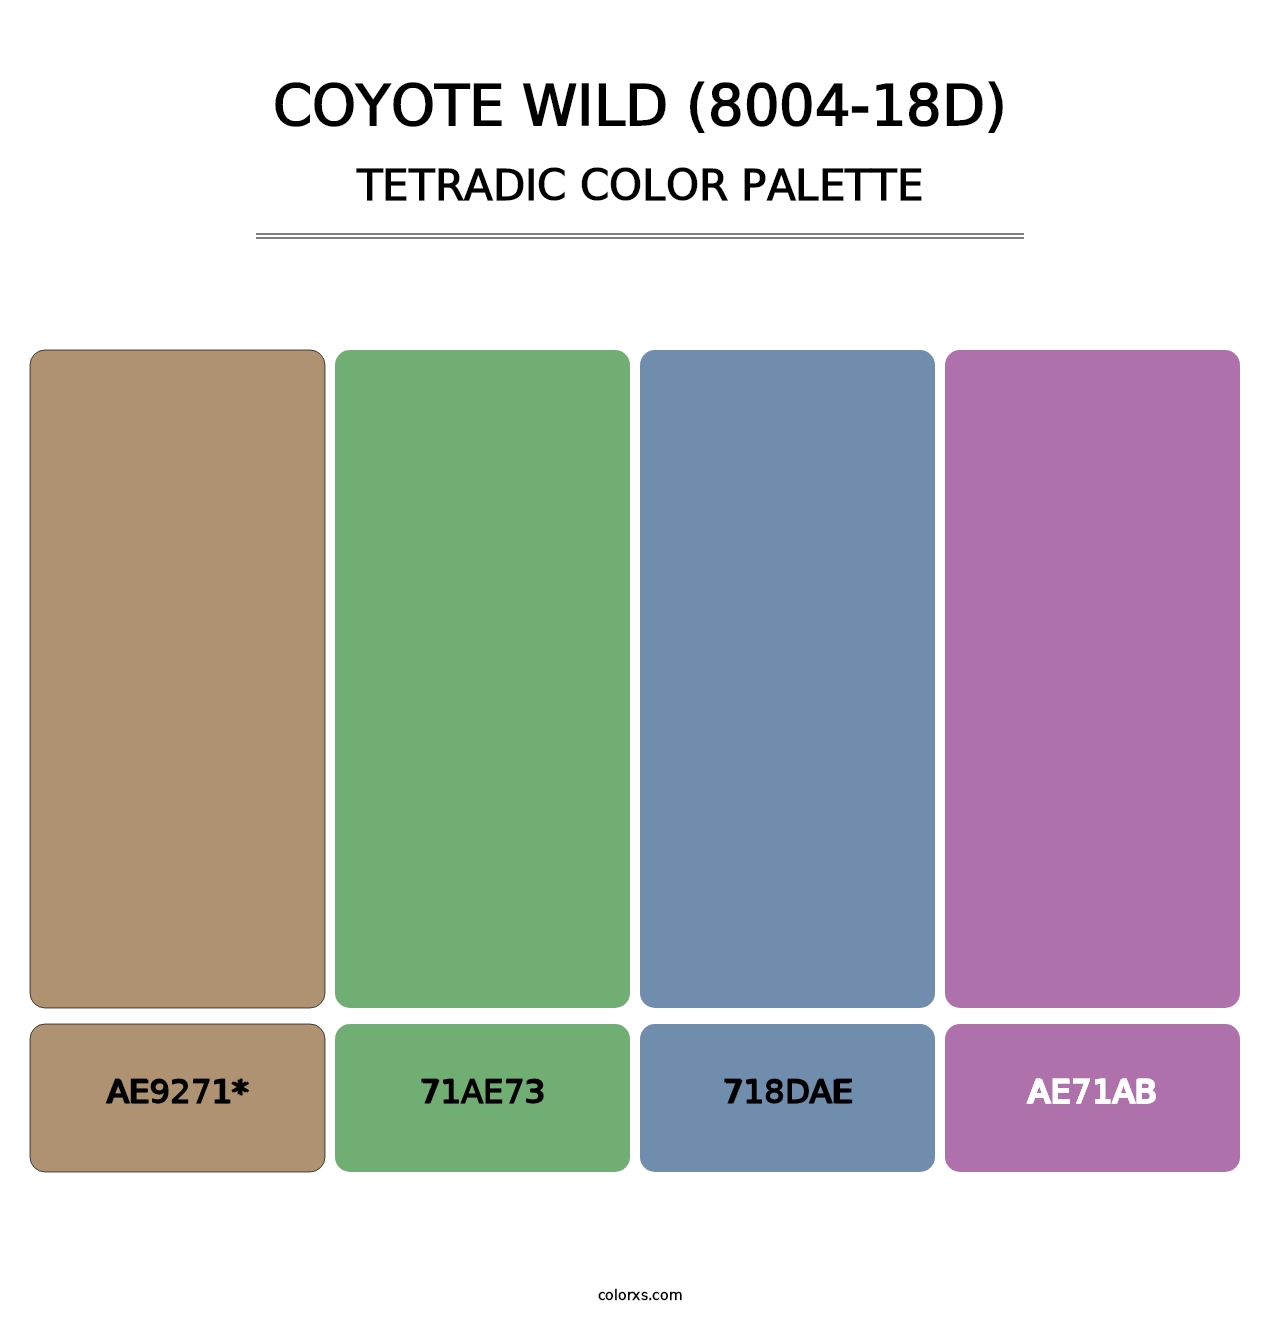 Coyote Wild (8004-18D) - Tetradic Color Palette